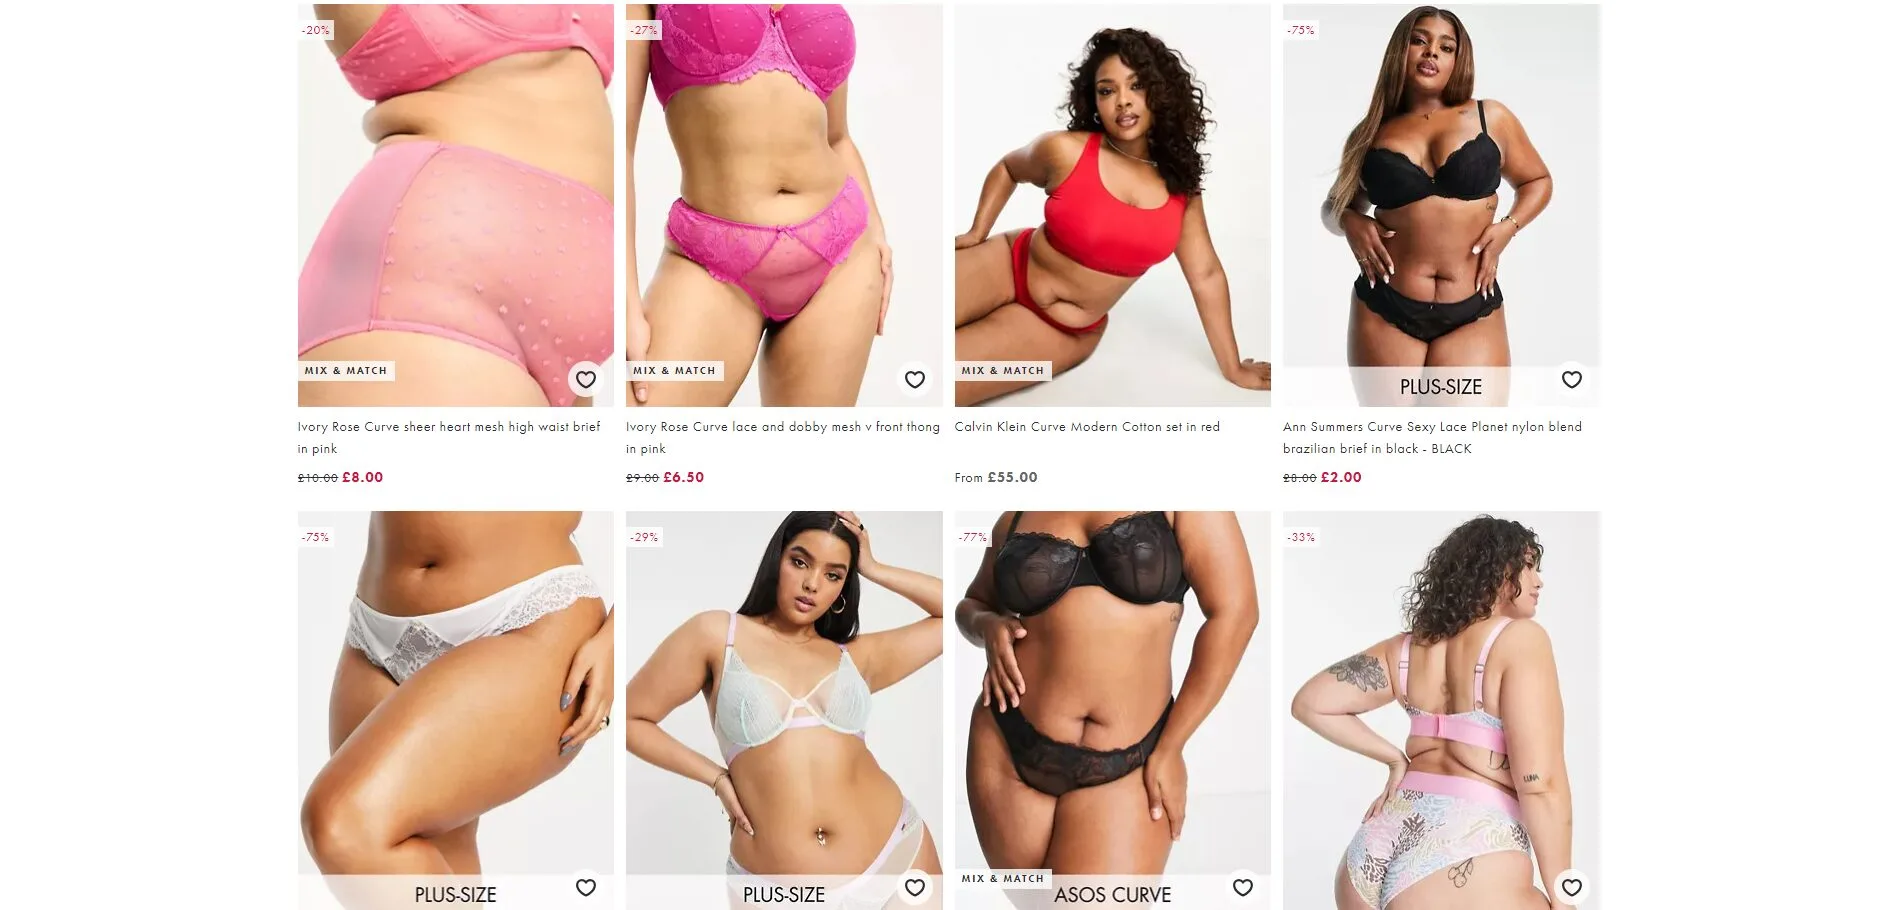 plus-size lingerie sets for boudoir photoshoot on asos marketplace